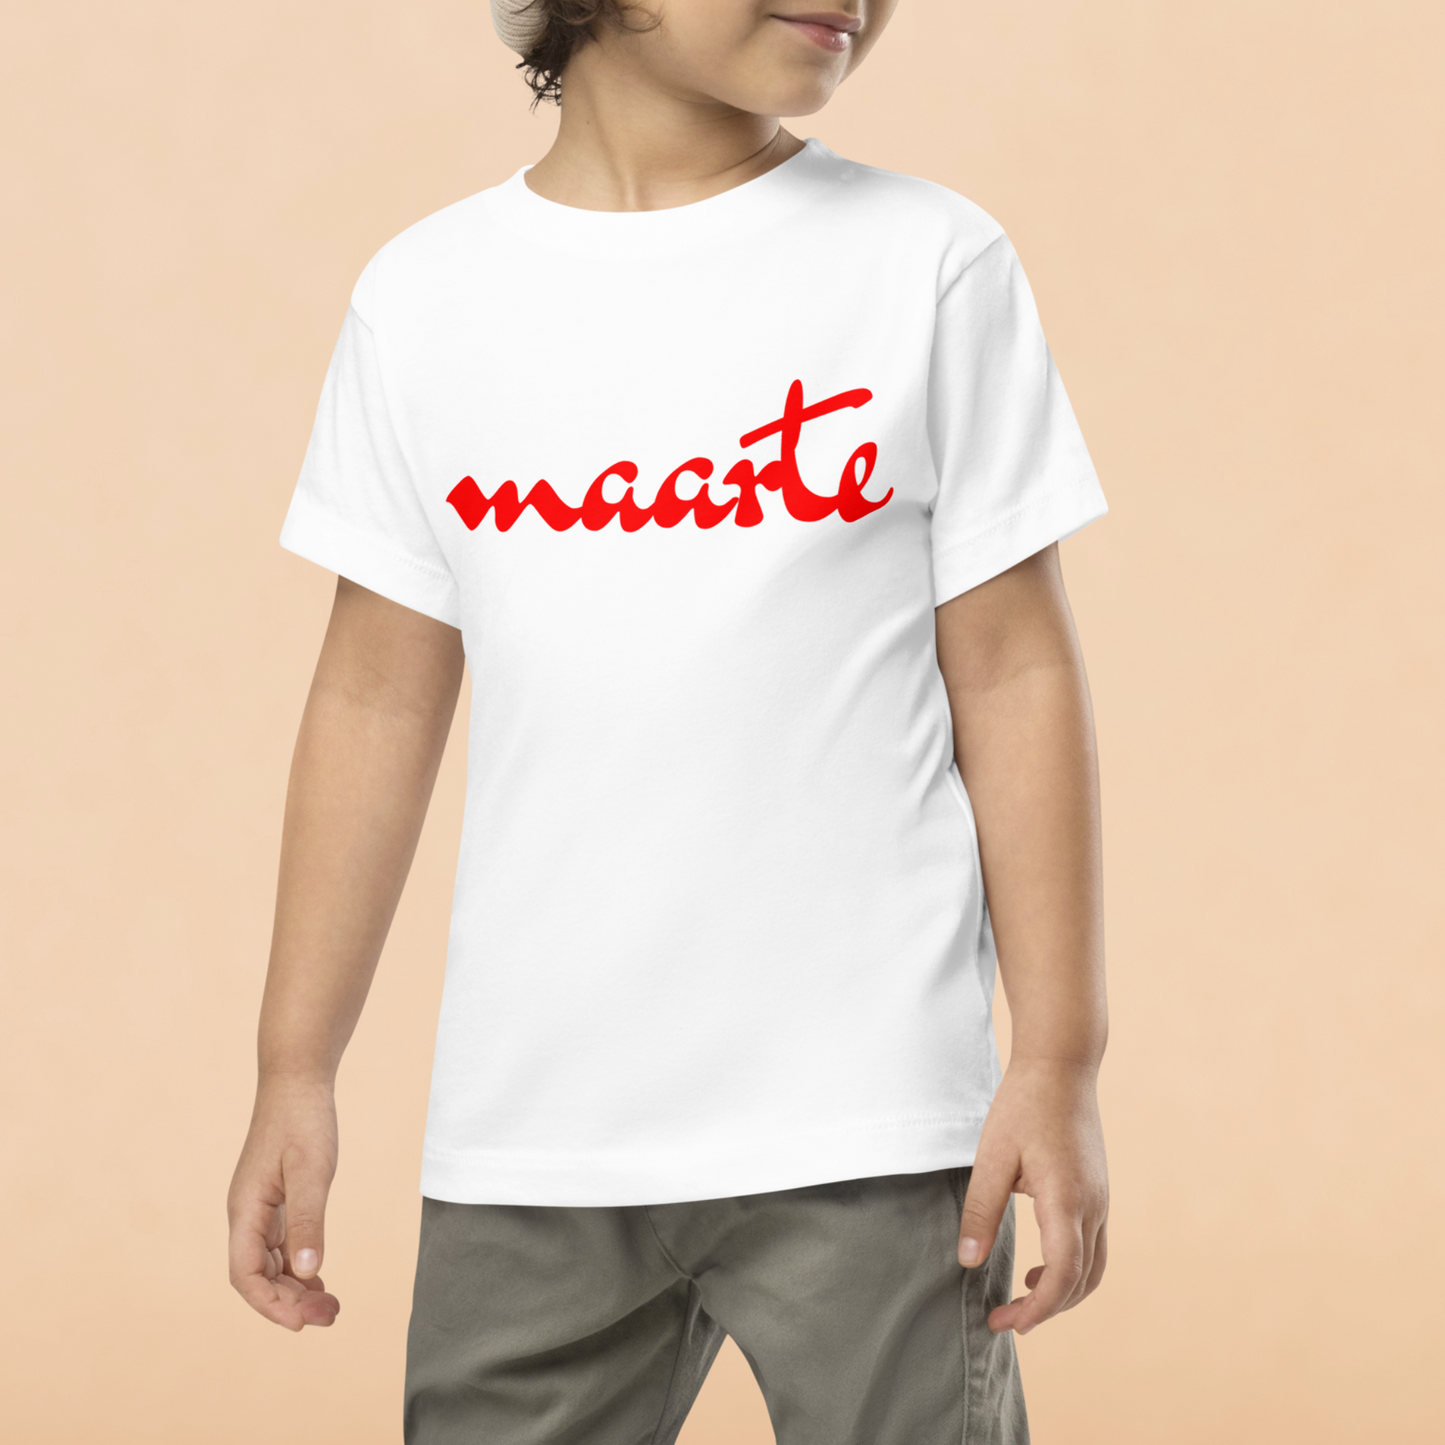 Filipino Toddler Shirt Maarte Statement Merch